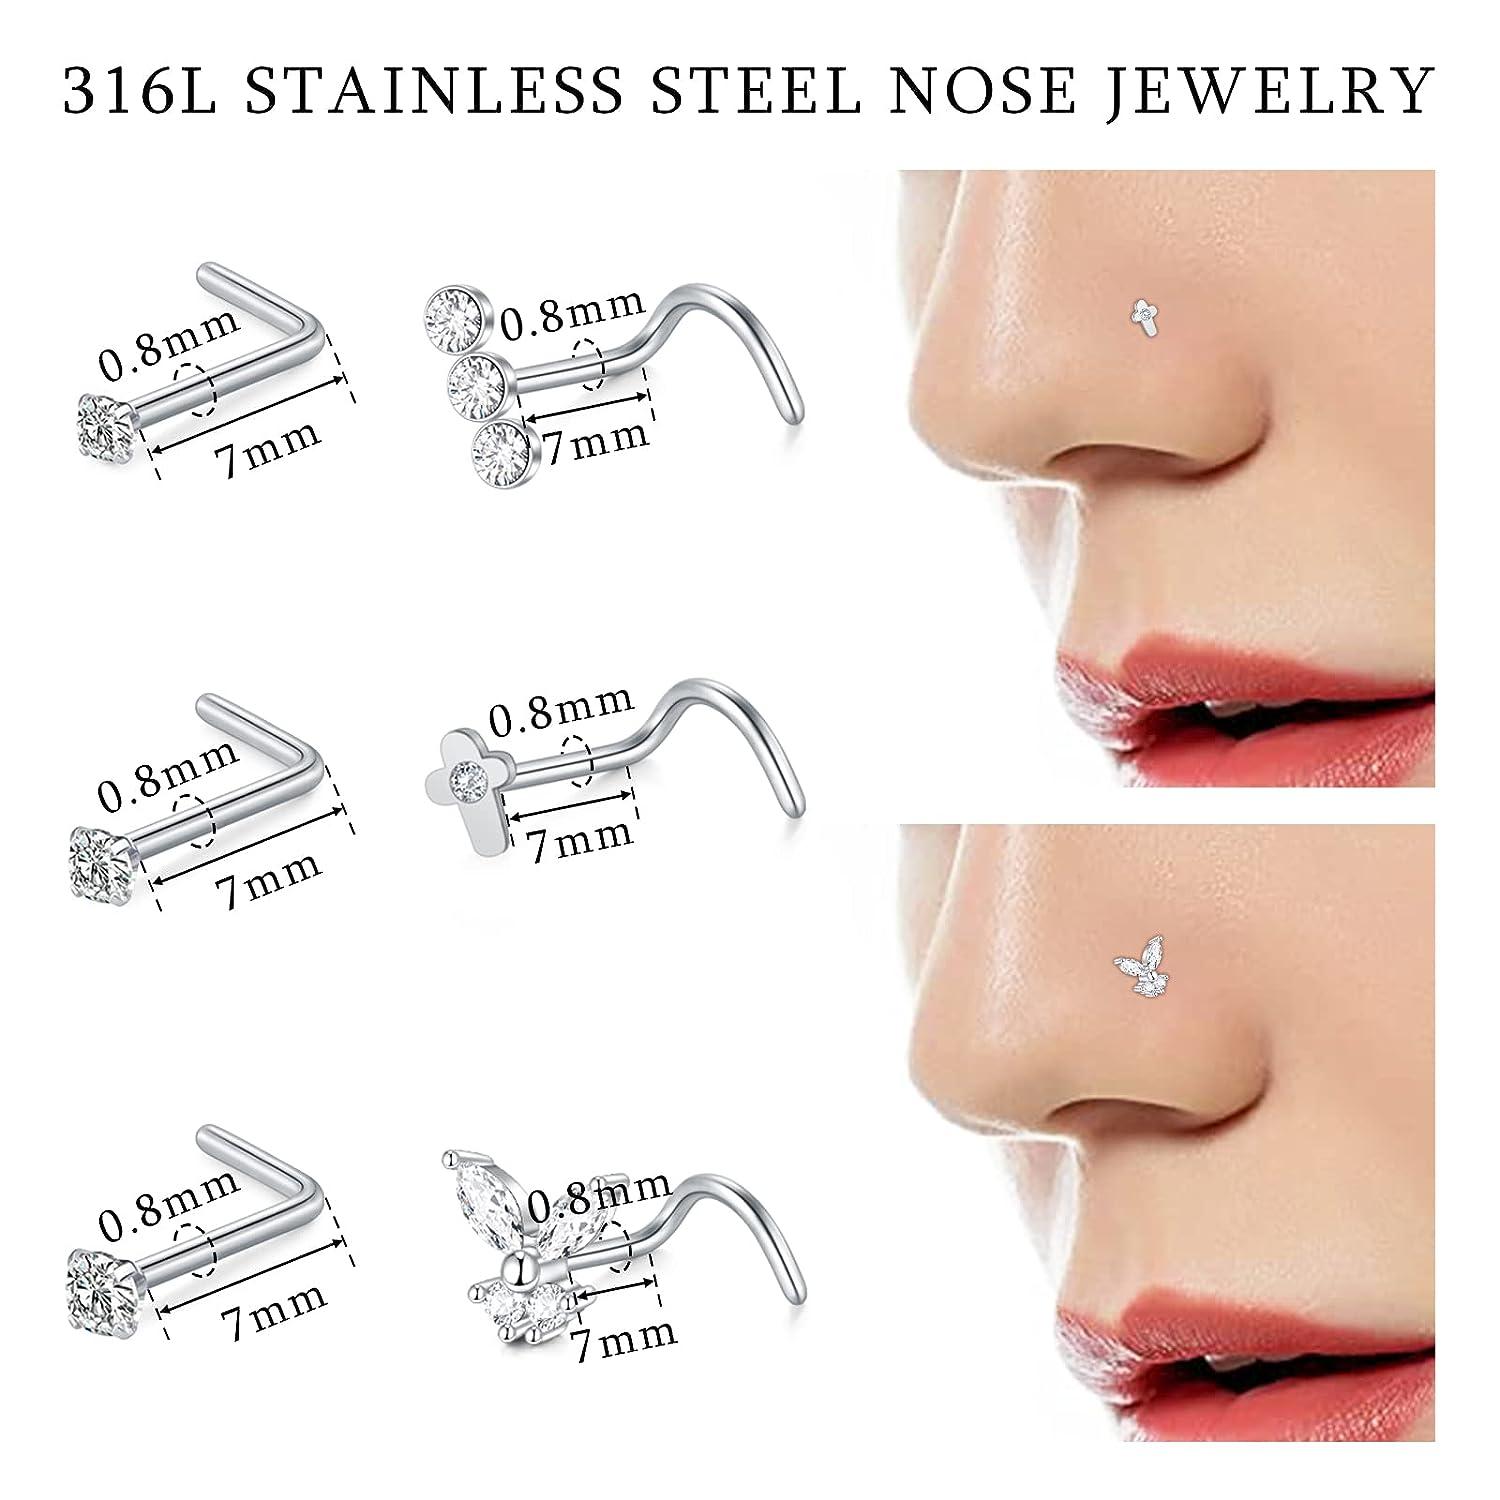 20 Gauge Stainless Steel Crystalline Gem Micro Nose Ring Twister